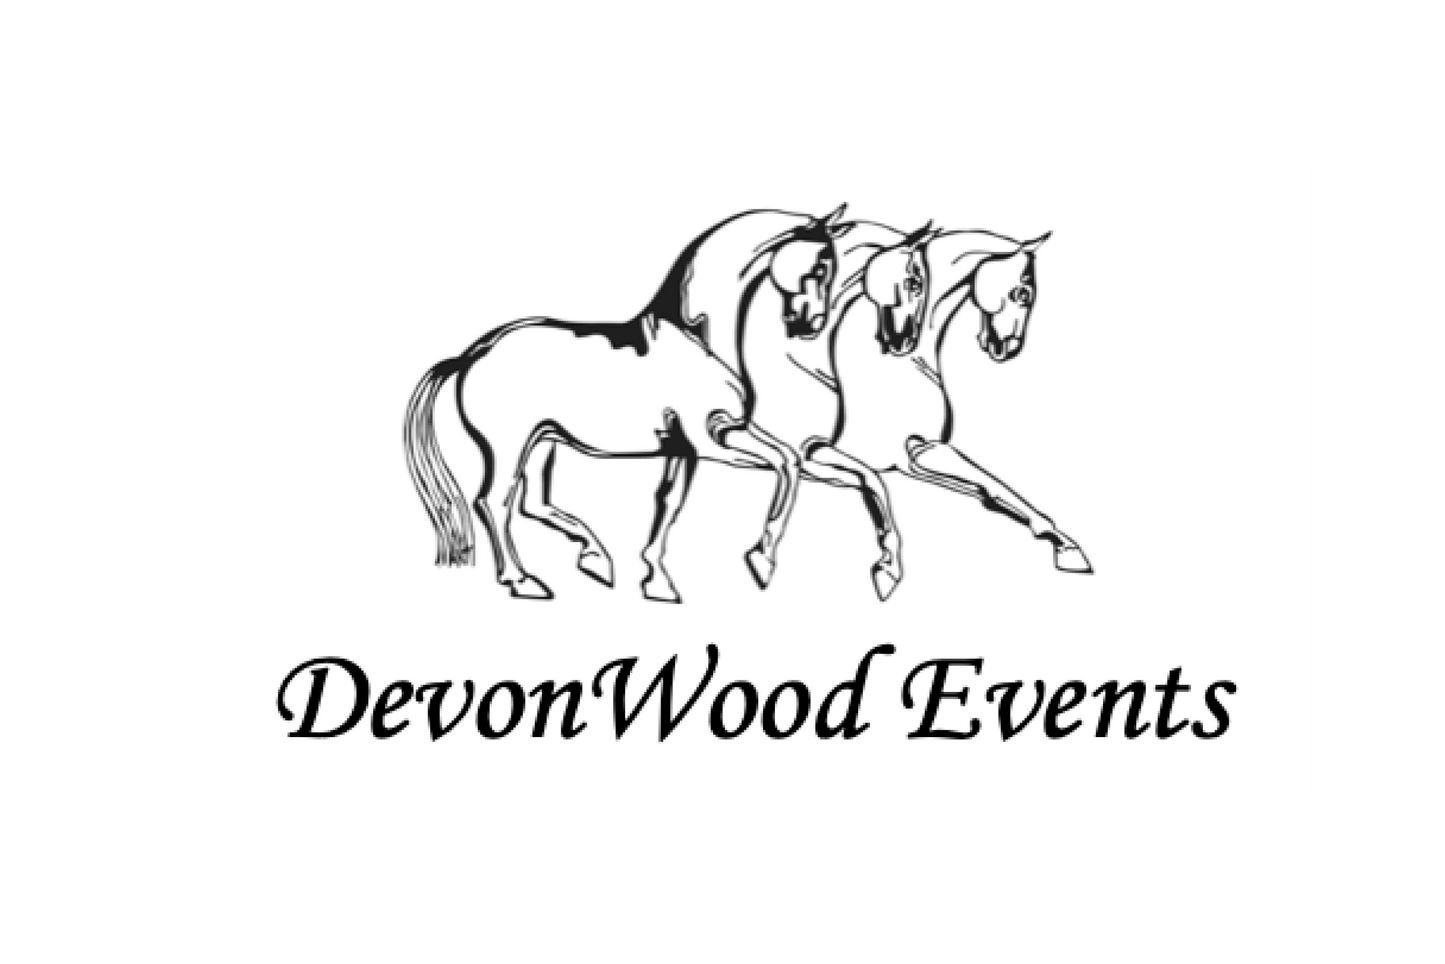 DevonWood Equestrian Centre